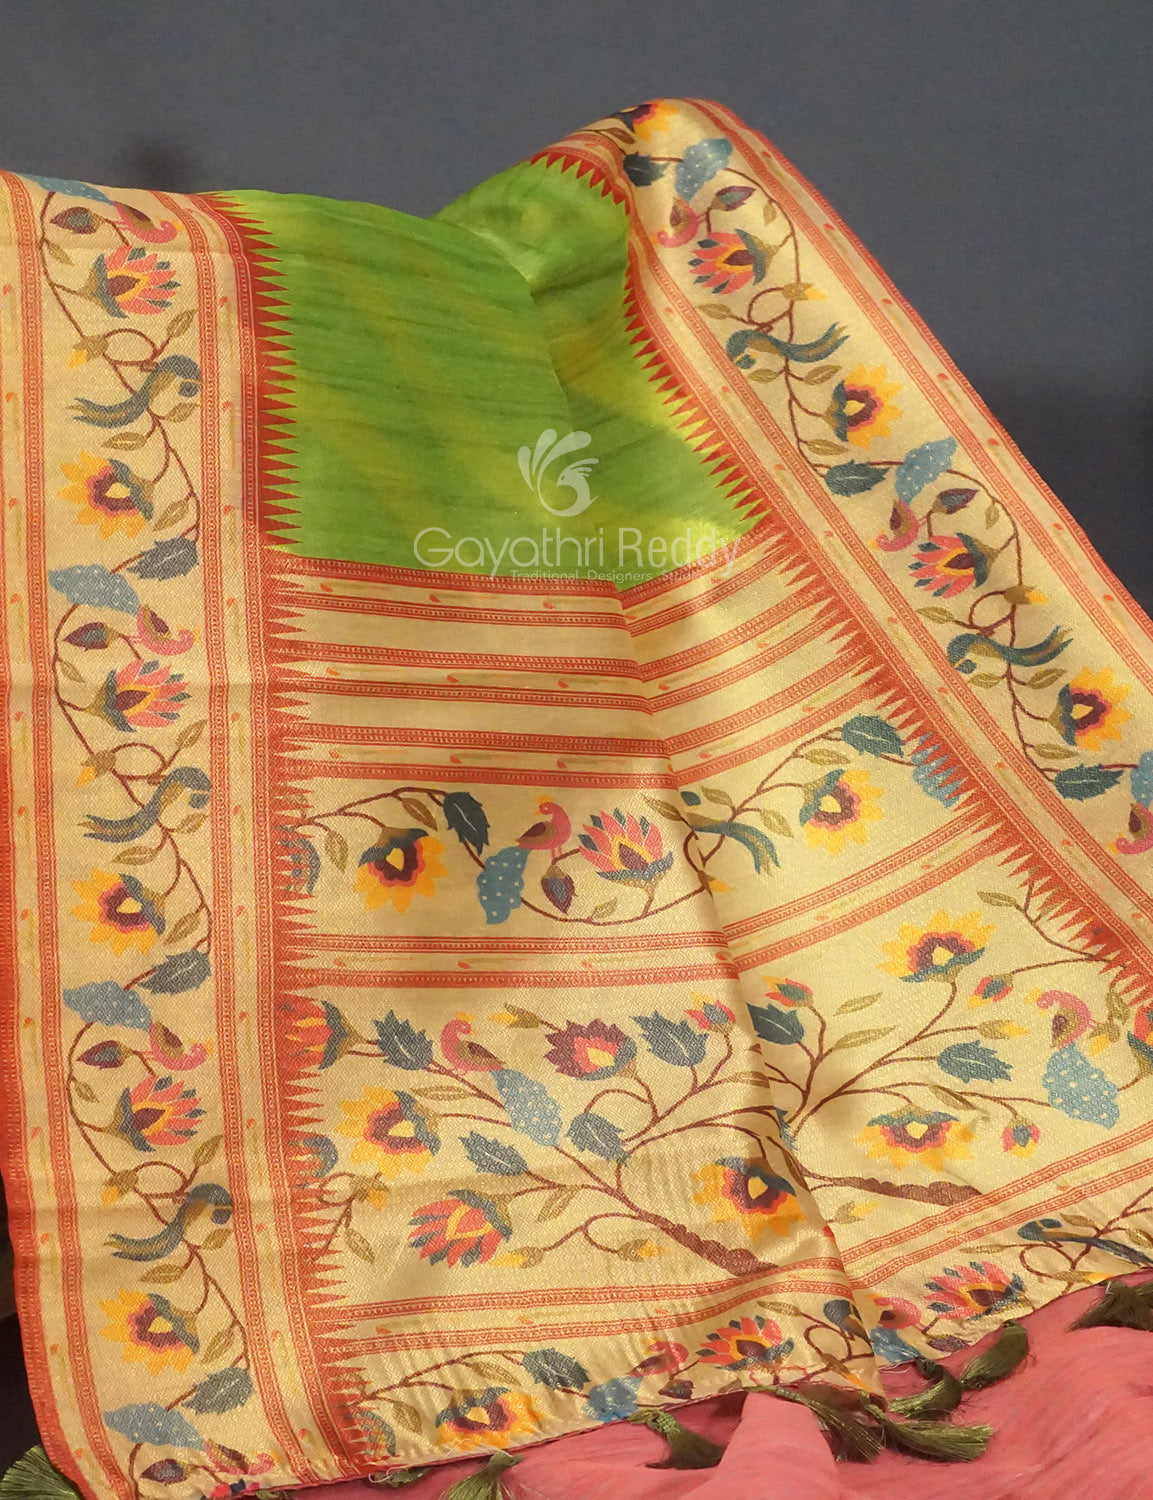 Shop Exquisite Gayathri Reddy designer sarees online USA.